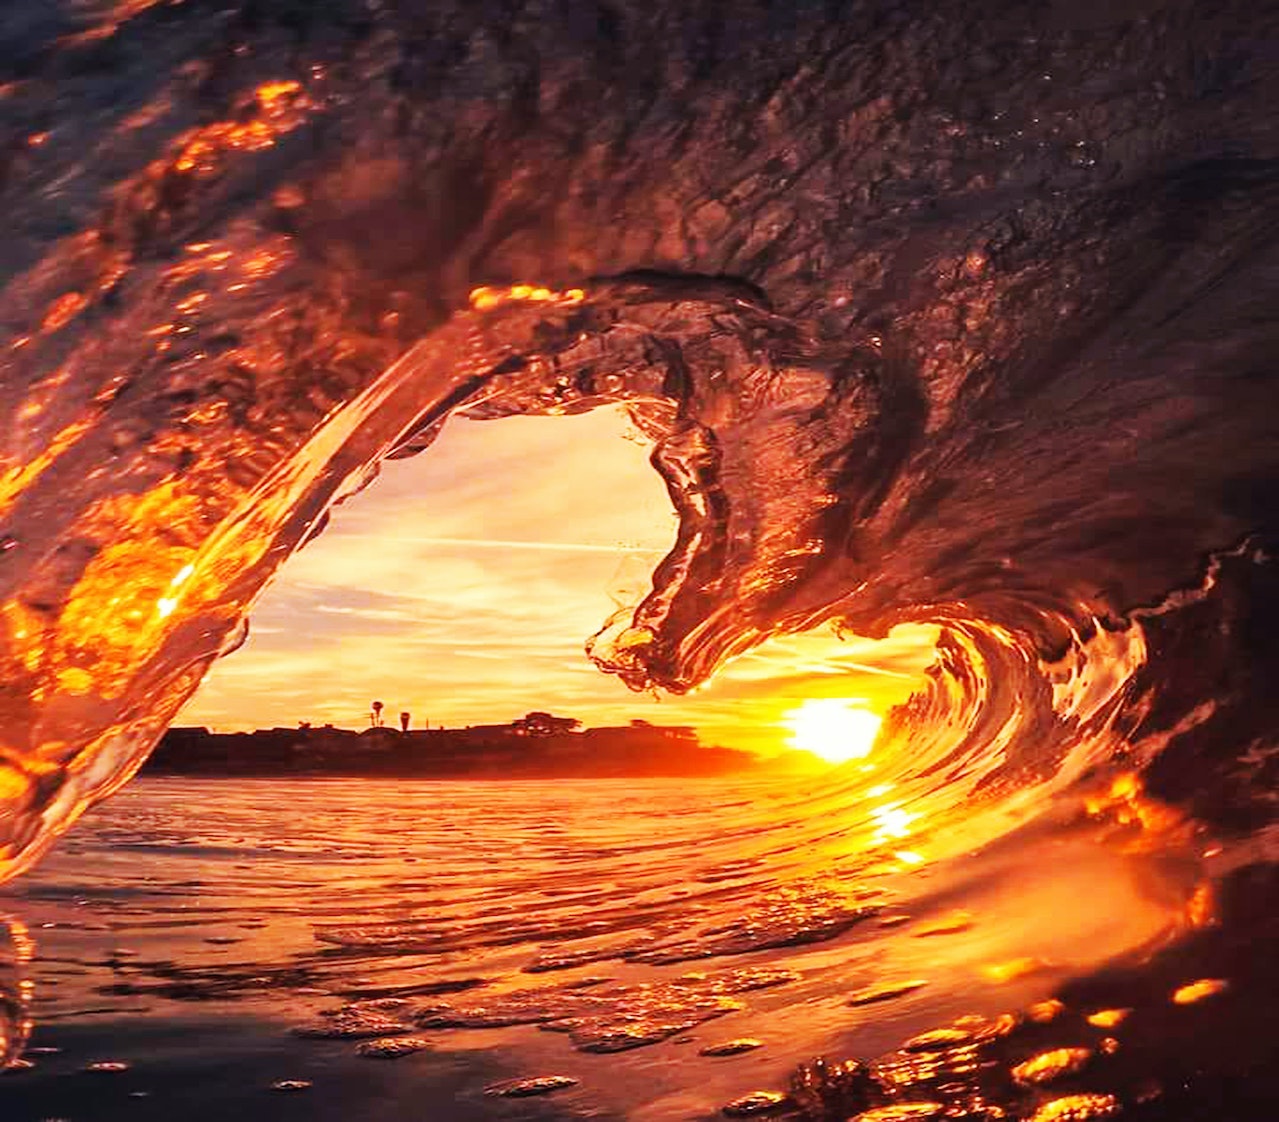 Sunrise and heart-shaped waves